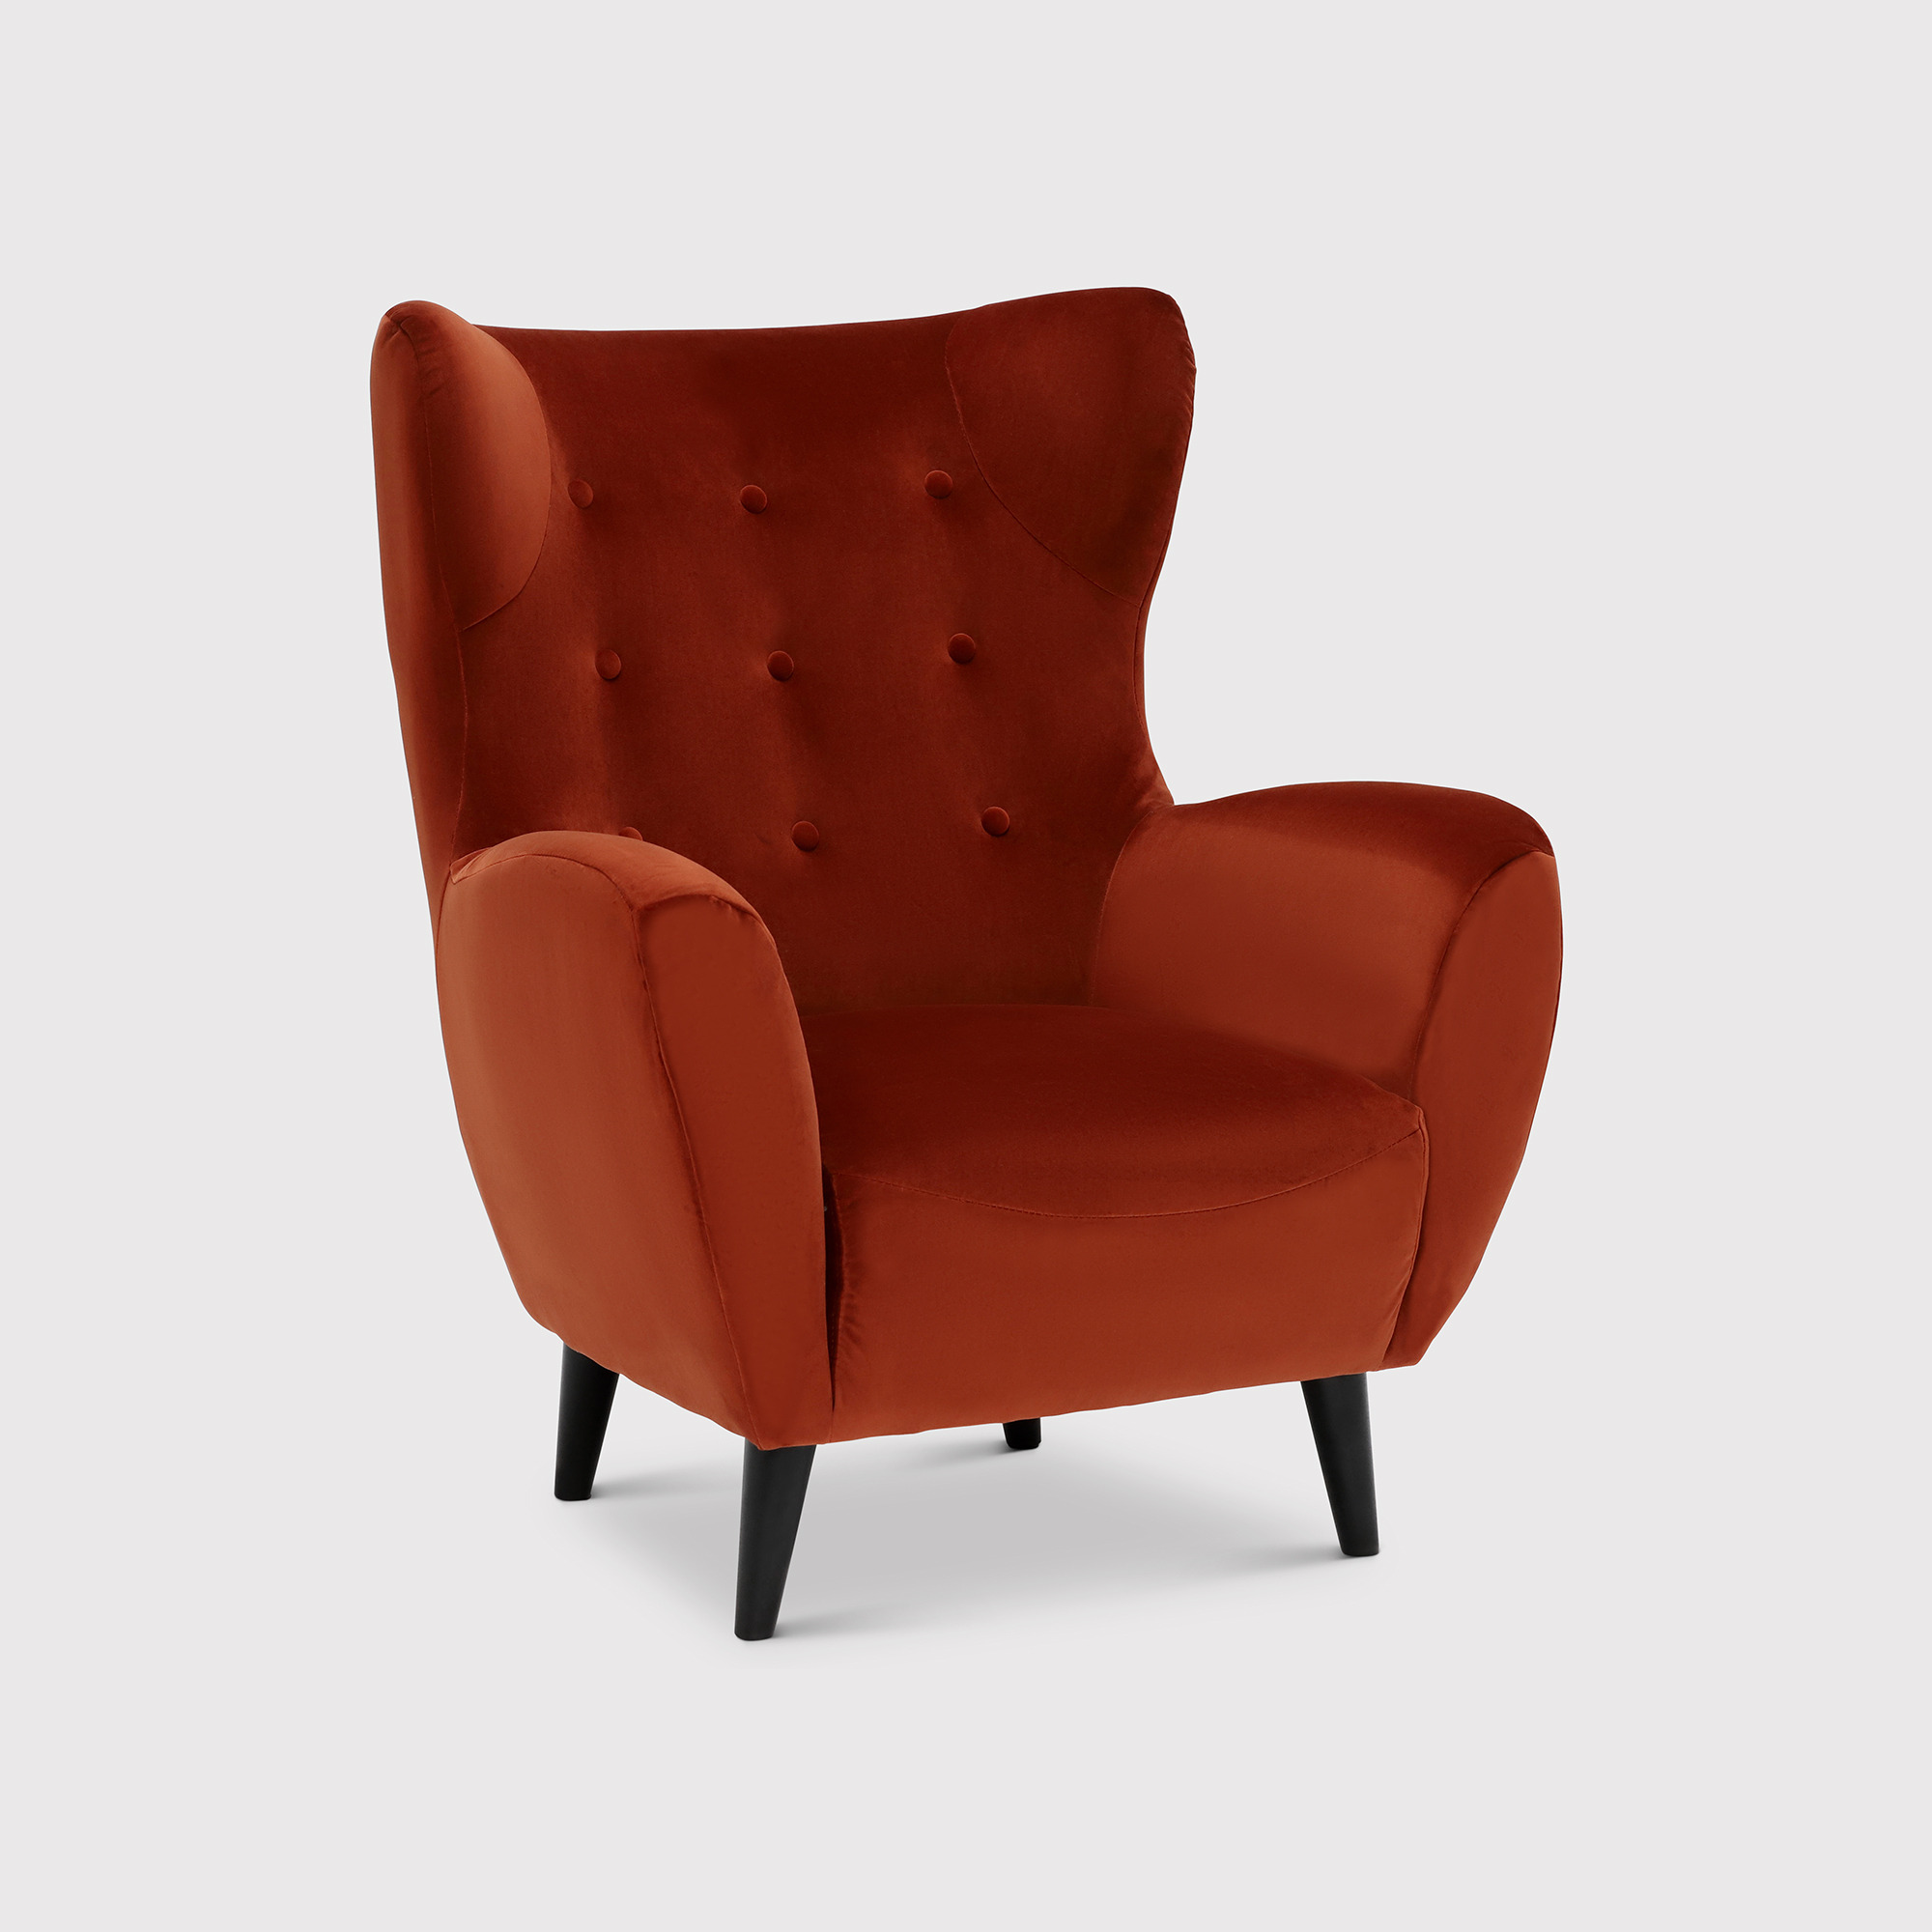 Delon Armchair, Orange Fabric - Barker & Stonehouse - image 1